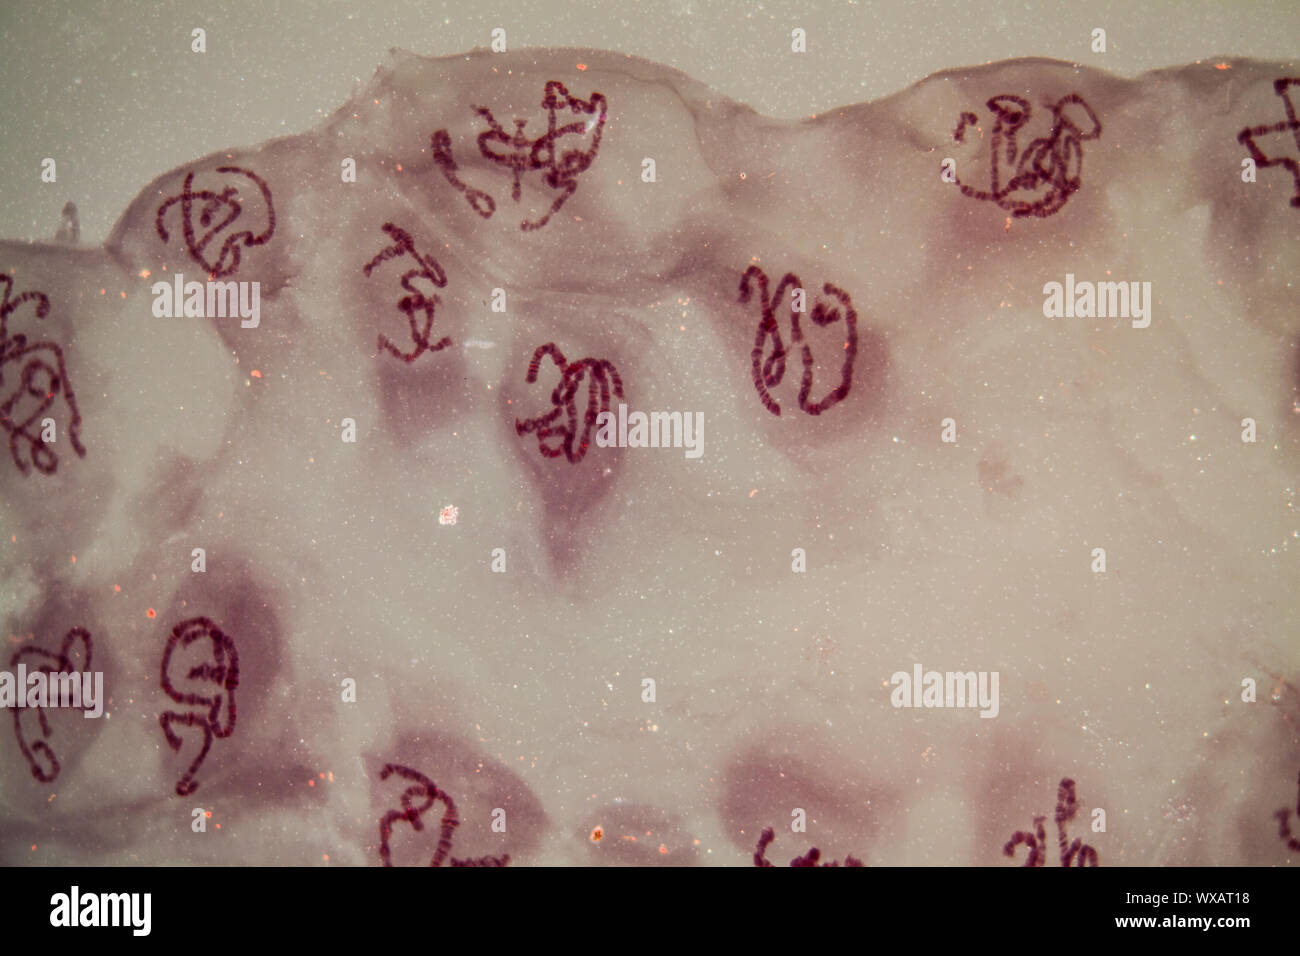 Giant chromosomes under the microscope 400x Stock Photo